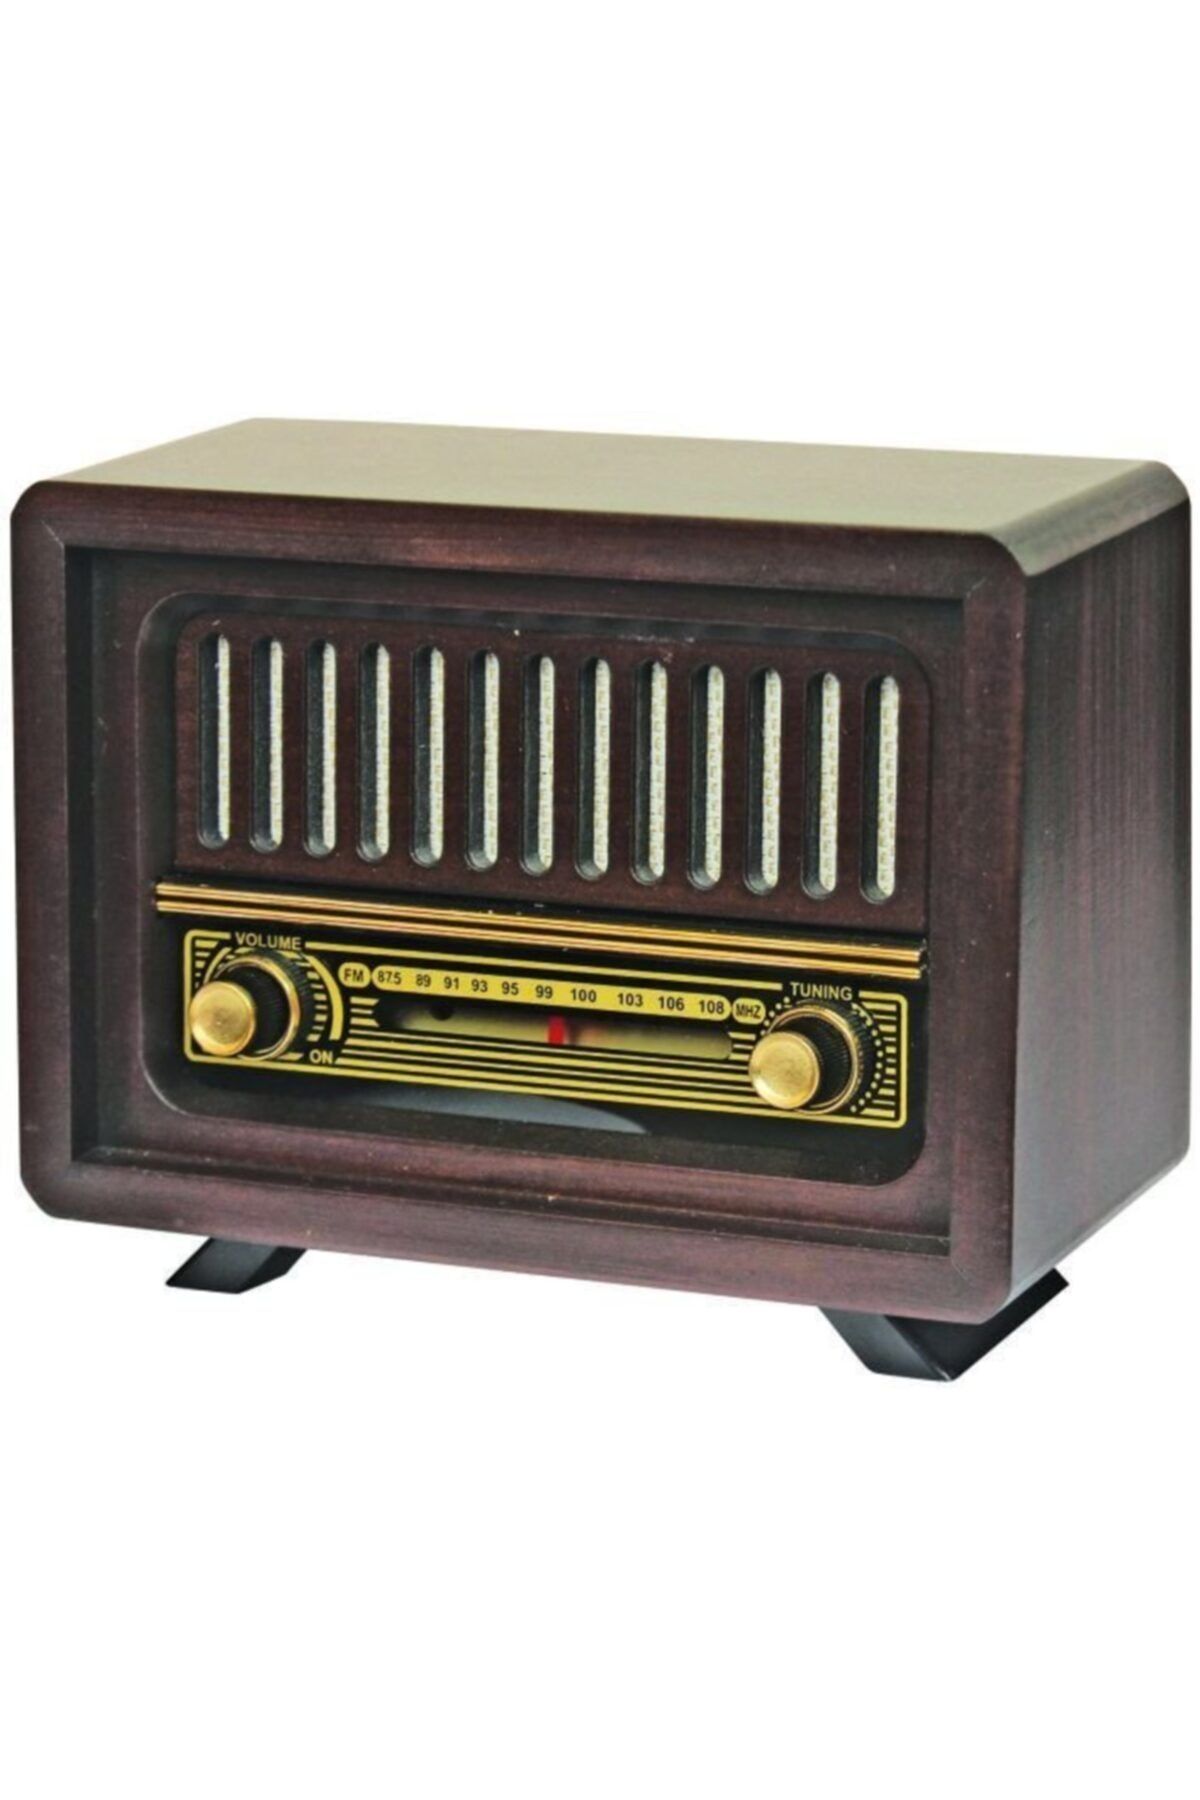 Otantik Çarşı Çamlıca Model Şarjlı Pil Adaptör Ahşap Retro Nostaljik Radyo